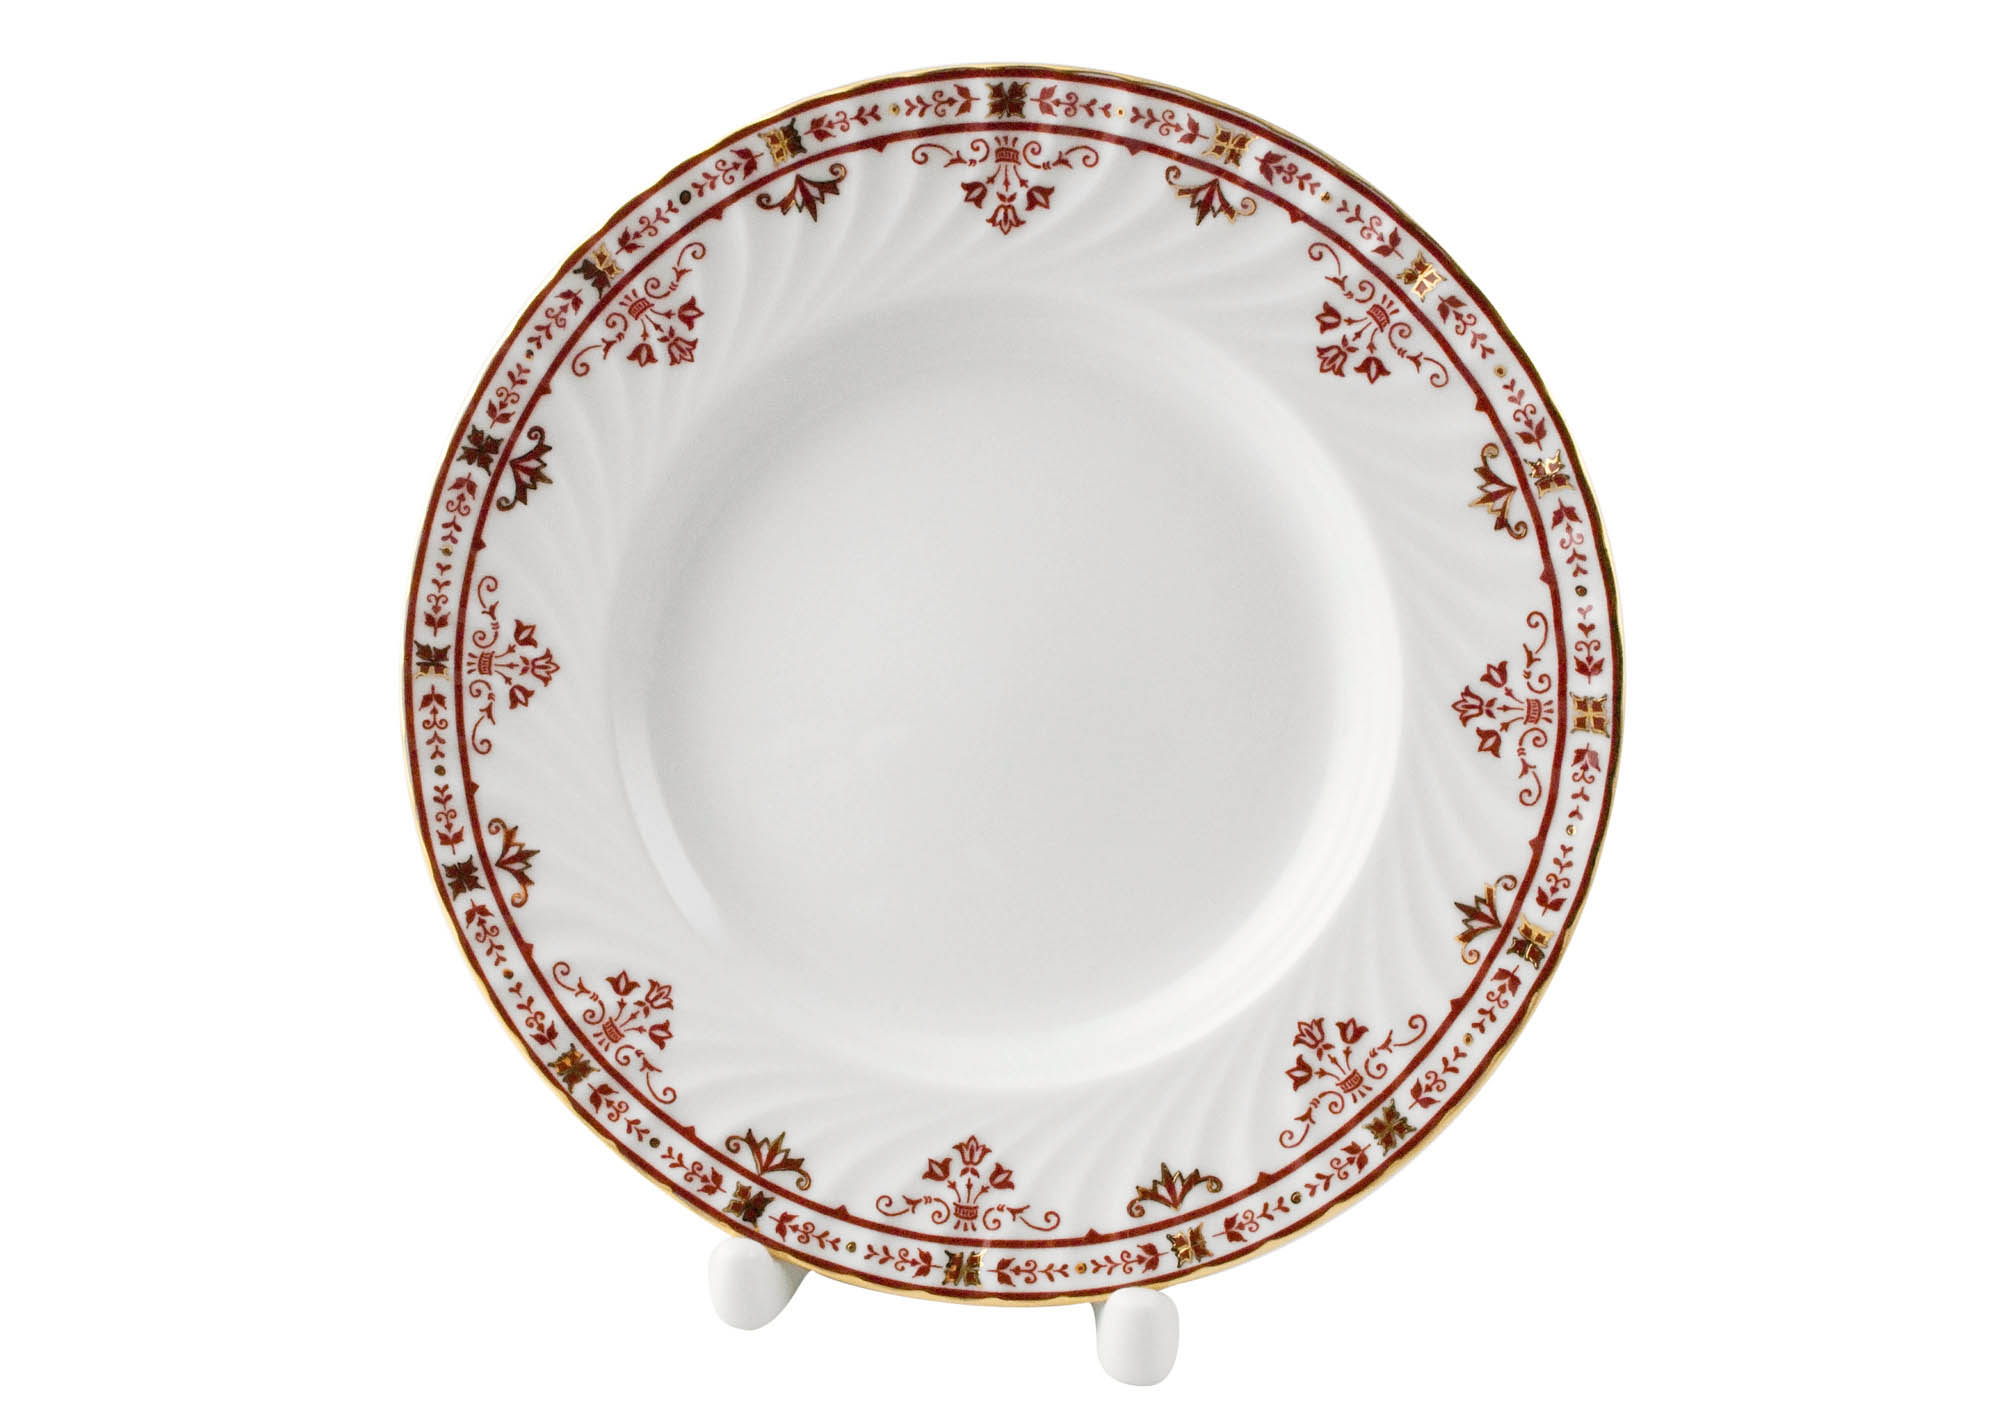 Buy Terracotta Frieze Dessert Plate 7" at GoldenCockerel.com